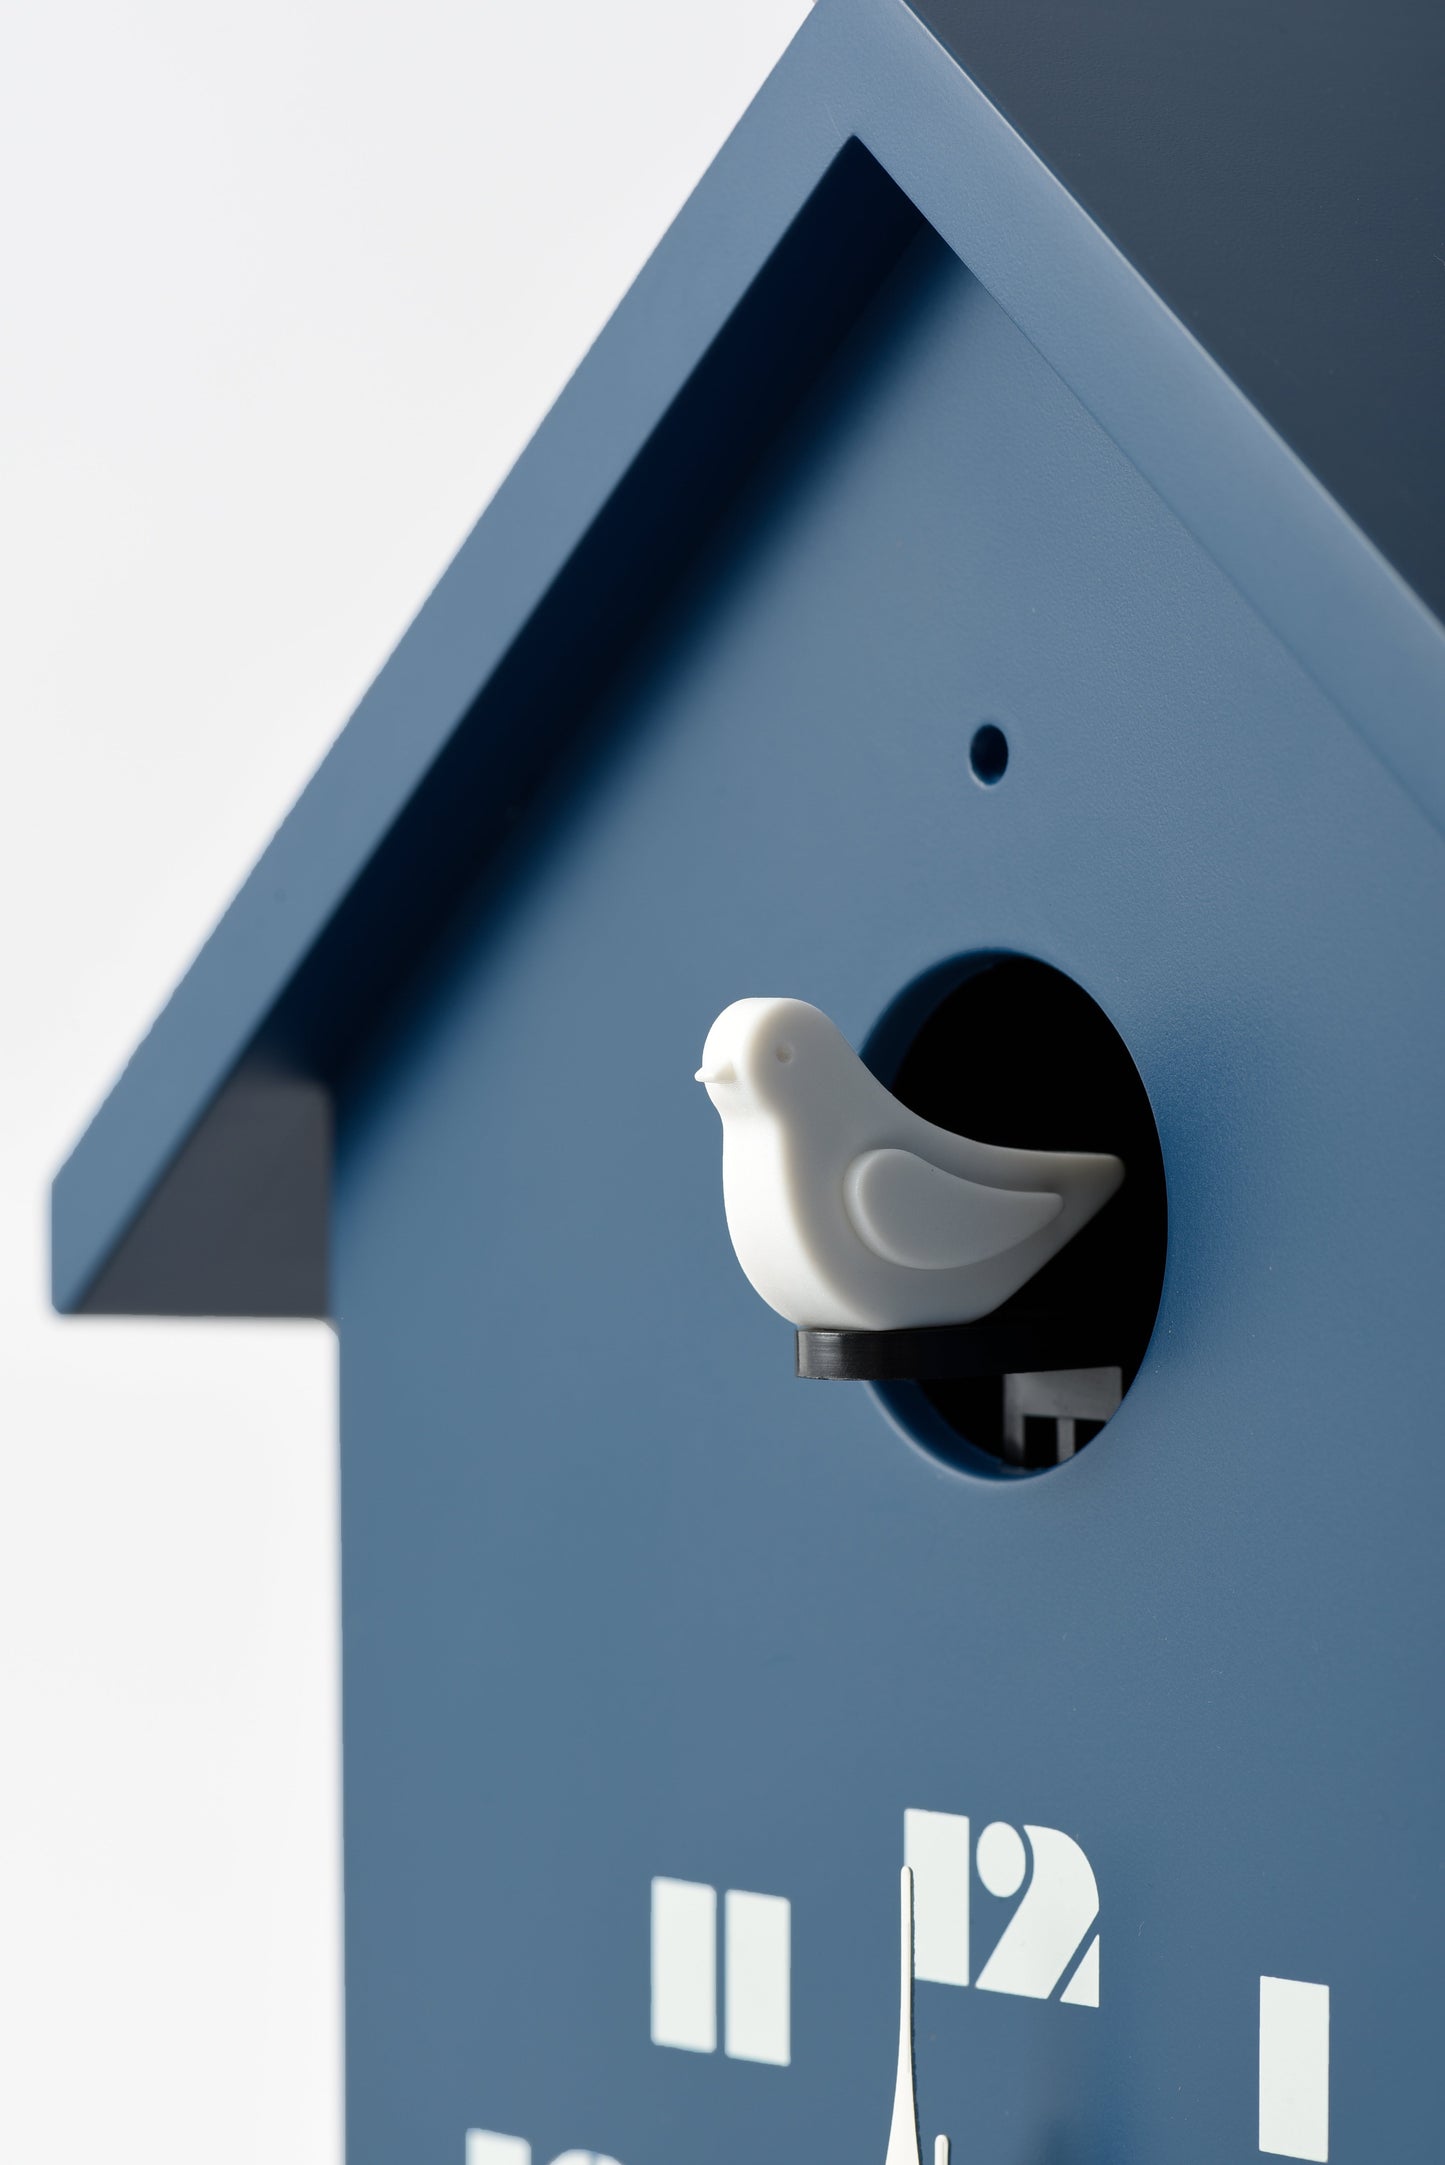 Bird House Clock in Mint Green